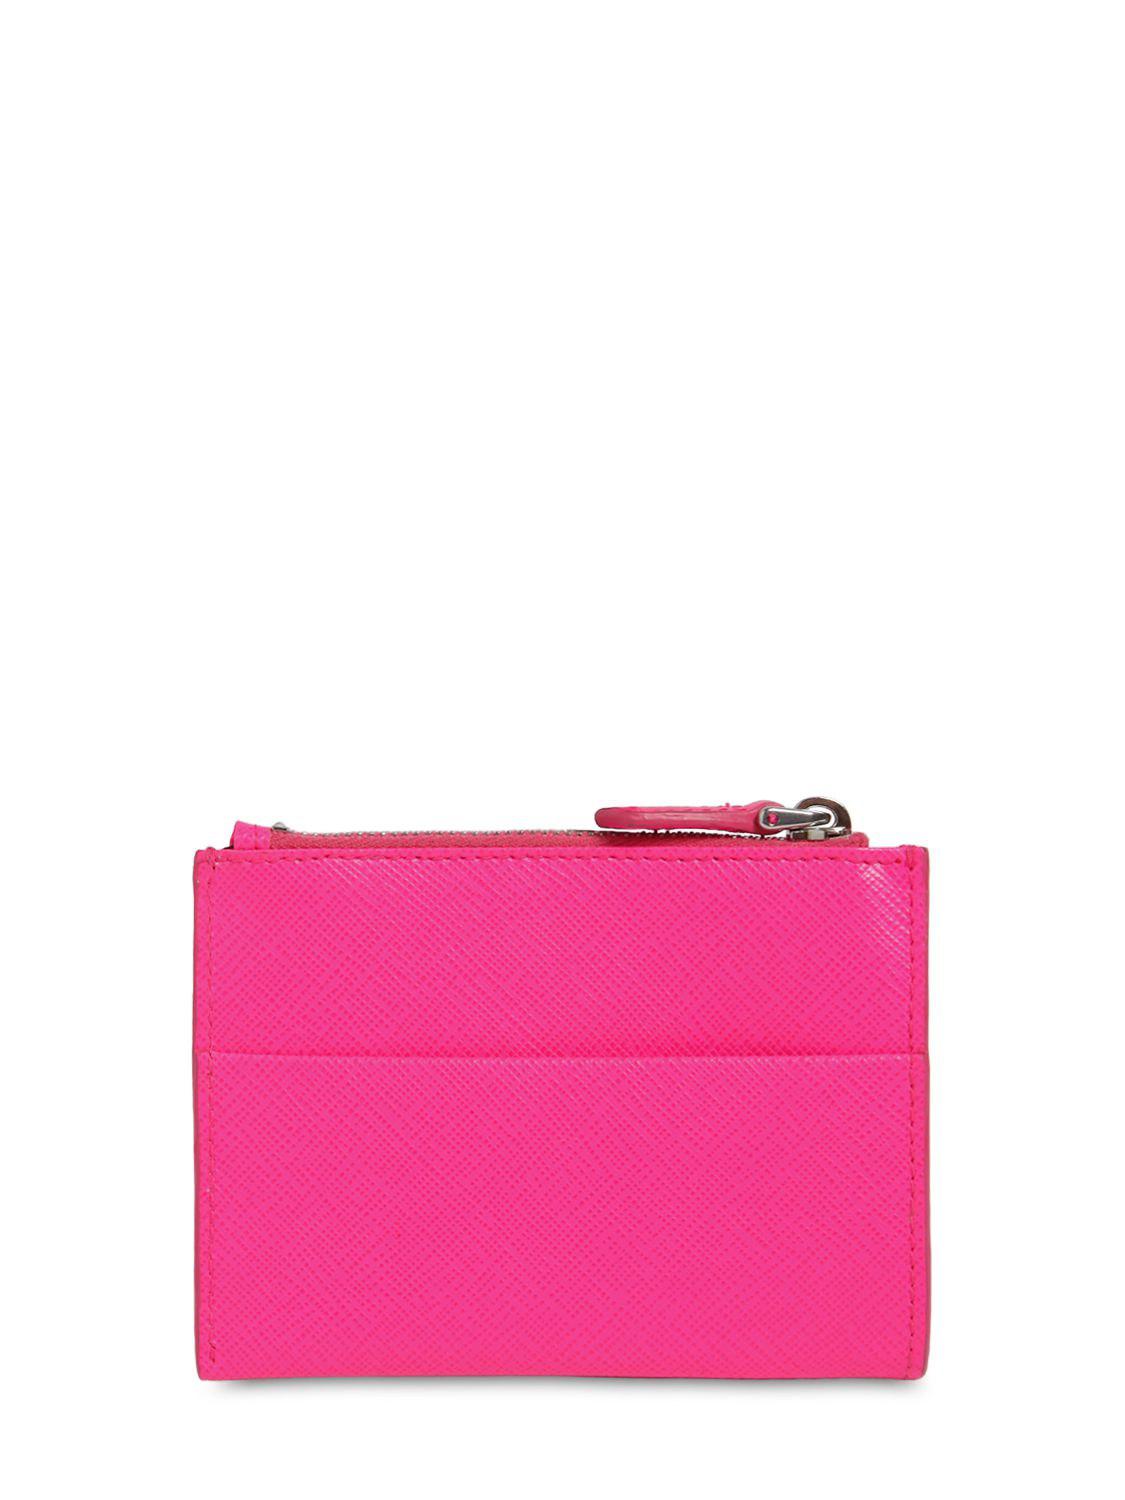 Prada Saffiano Leather Credit Card Holder in Neon Fuchsia (Pink) - Lyst